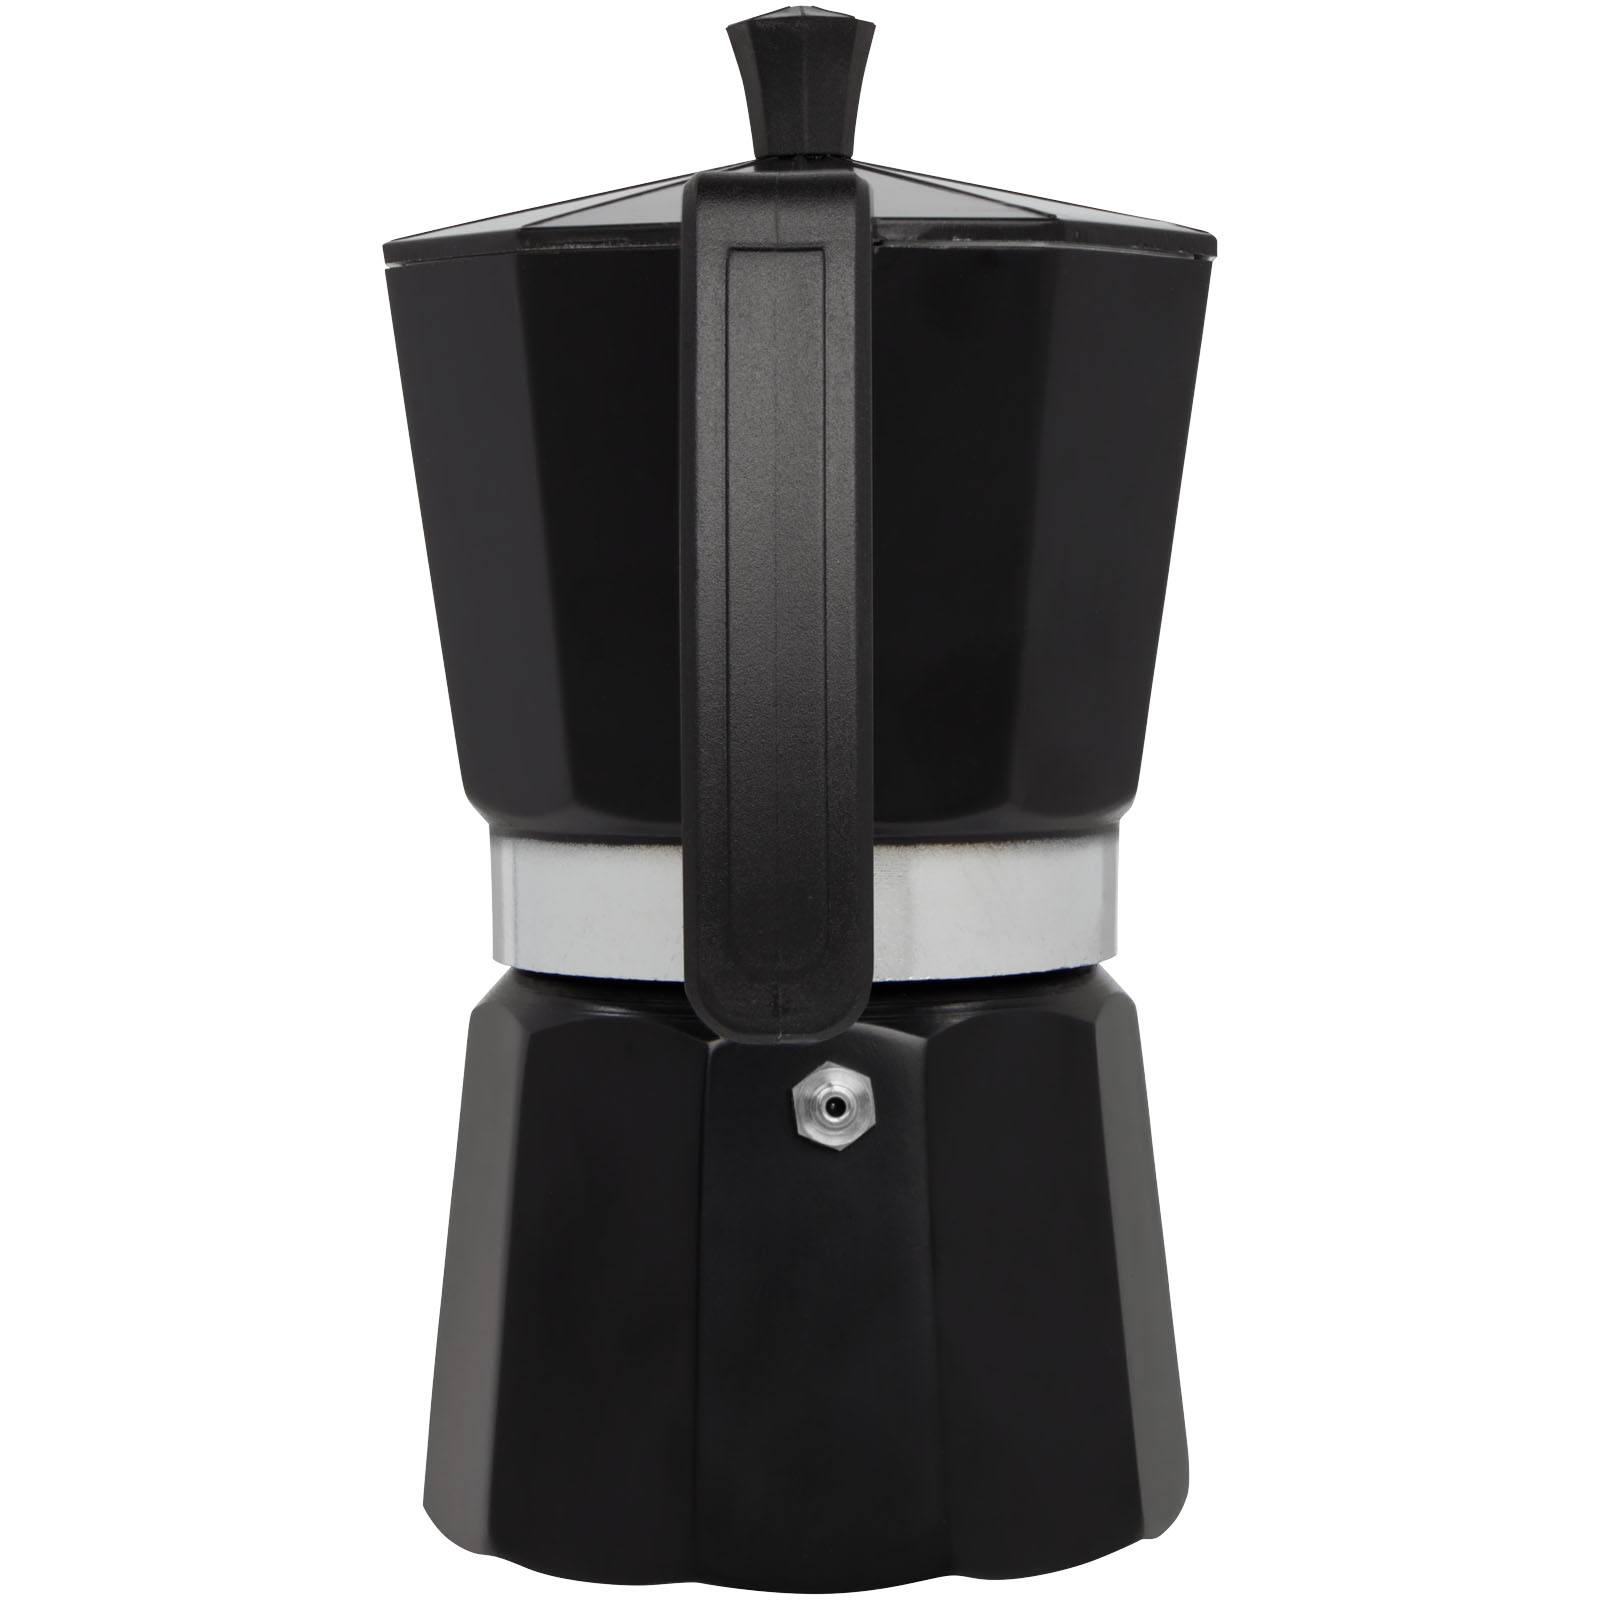 Advertising Kitchenware - Kone 600 ml mocha coffee maker - 2